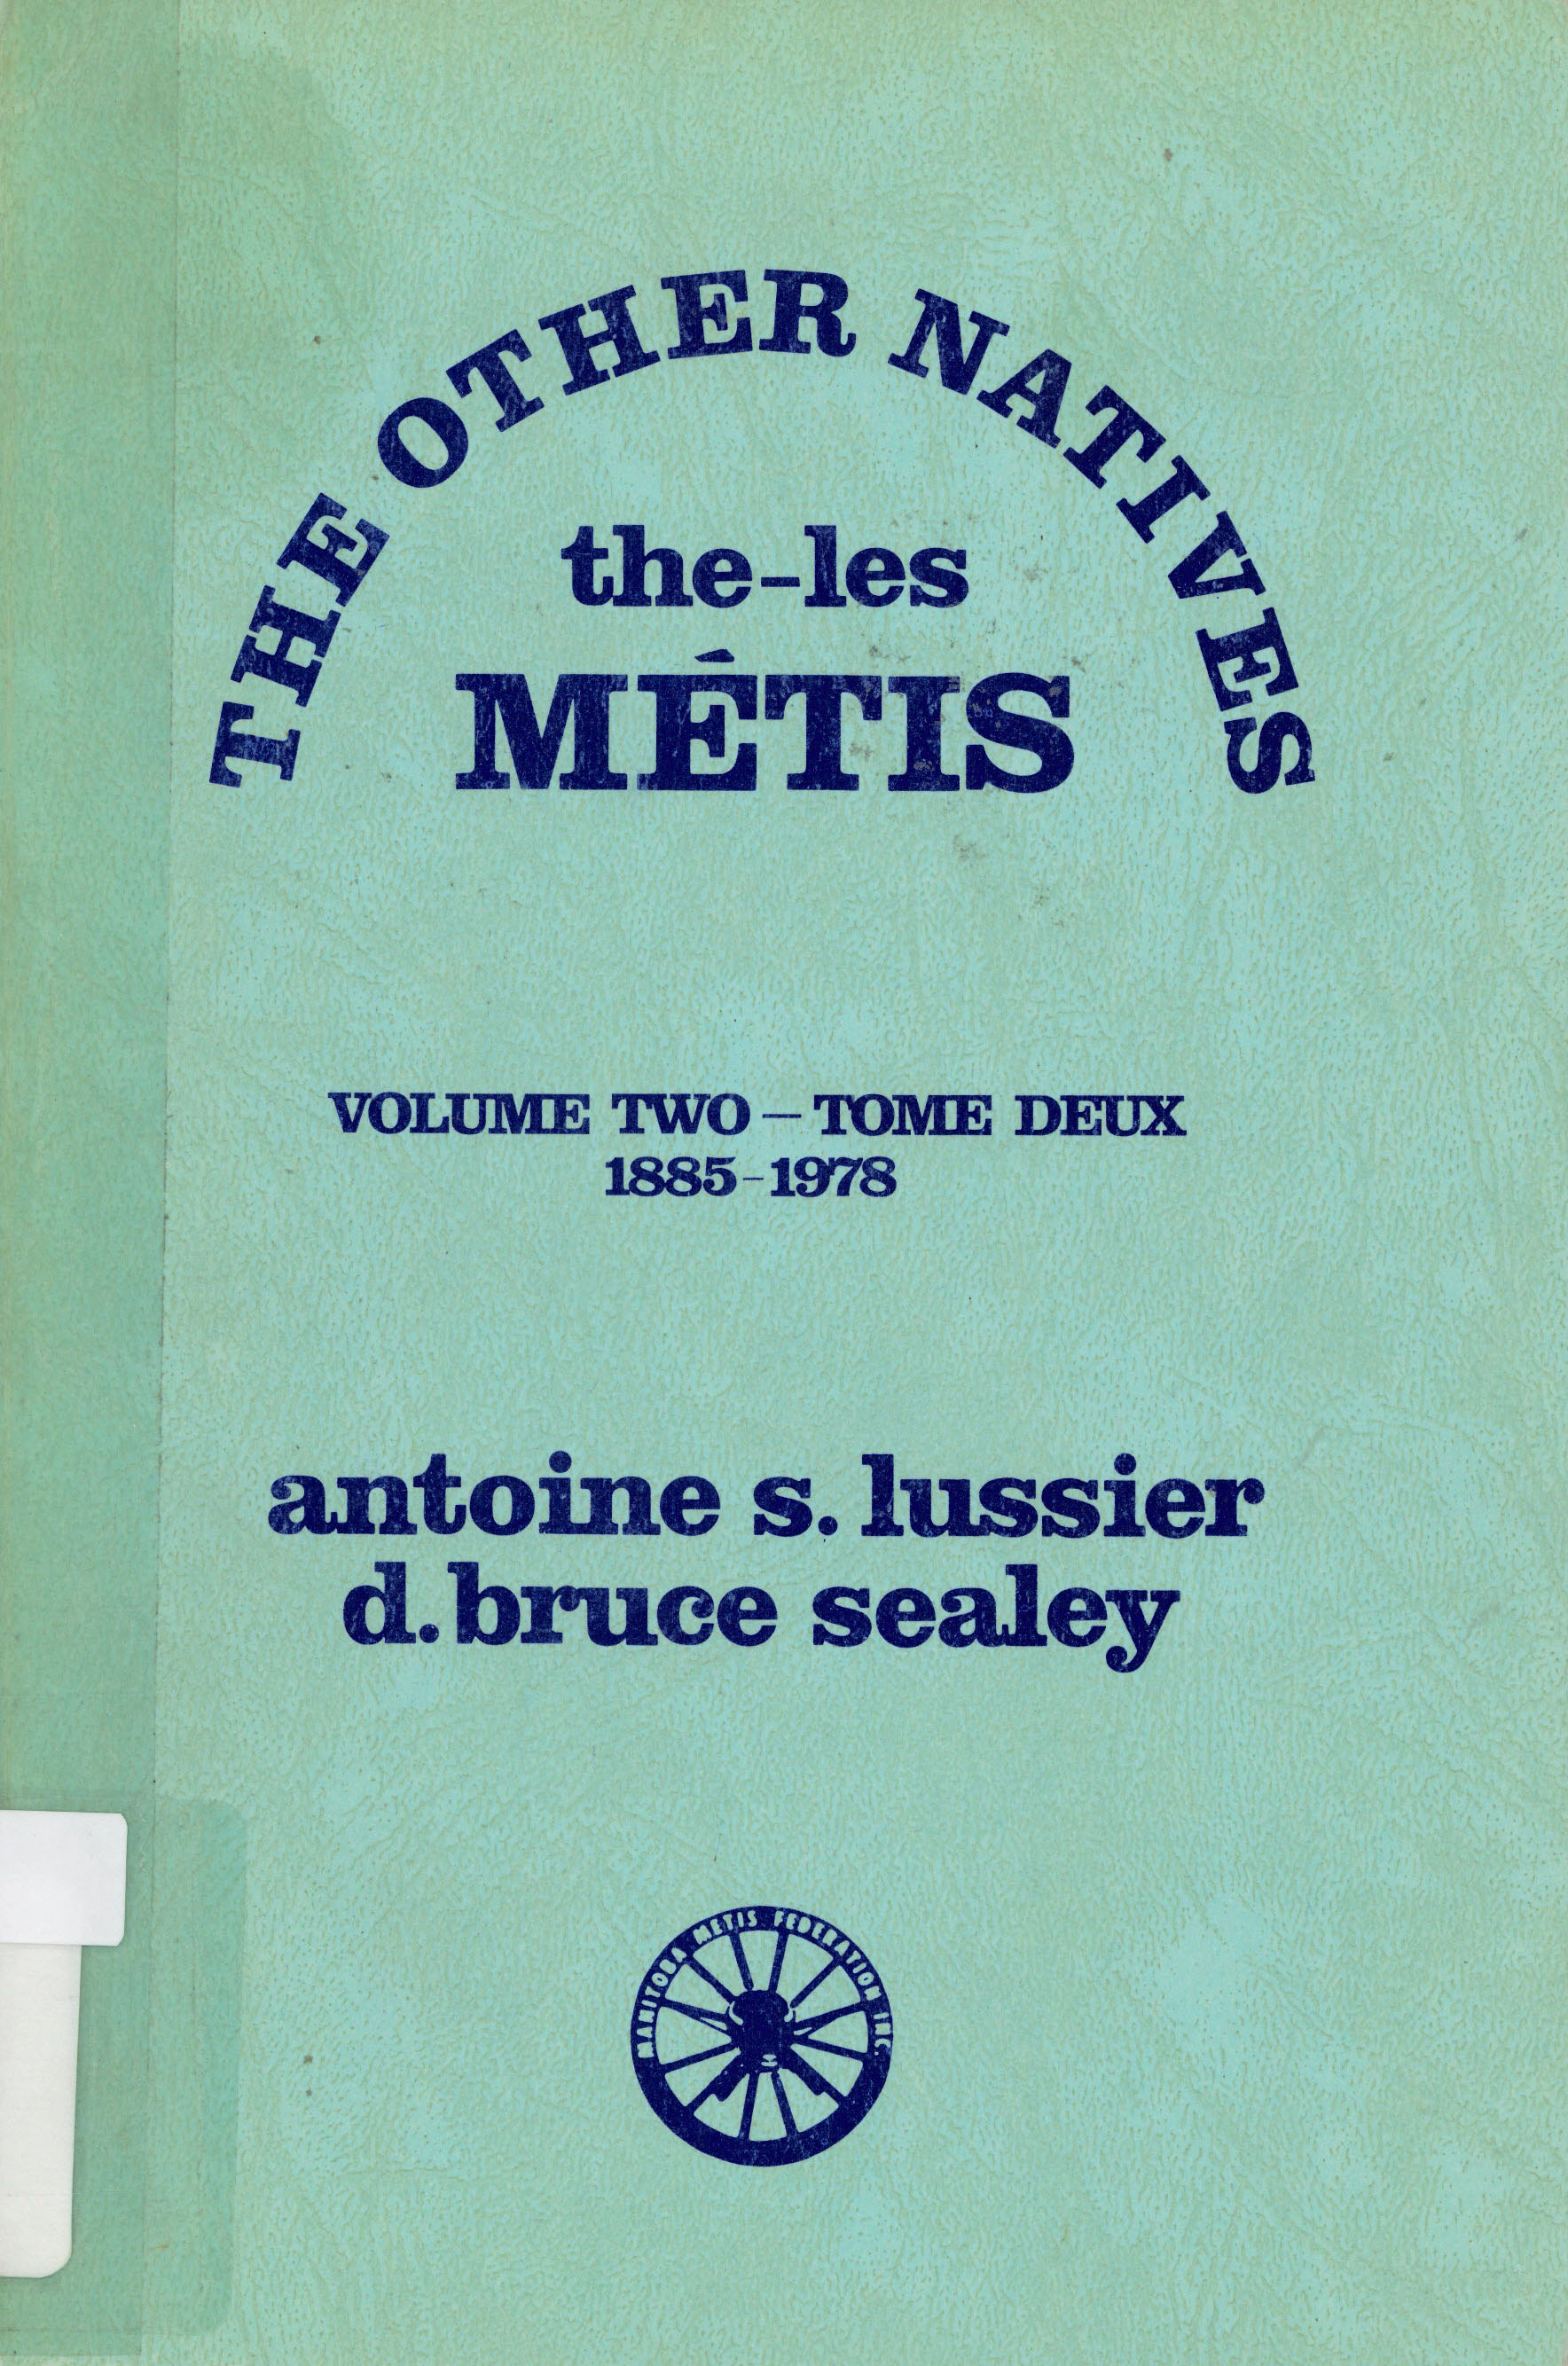 The Other natives: : the-les Métis /